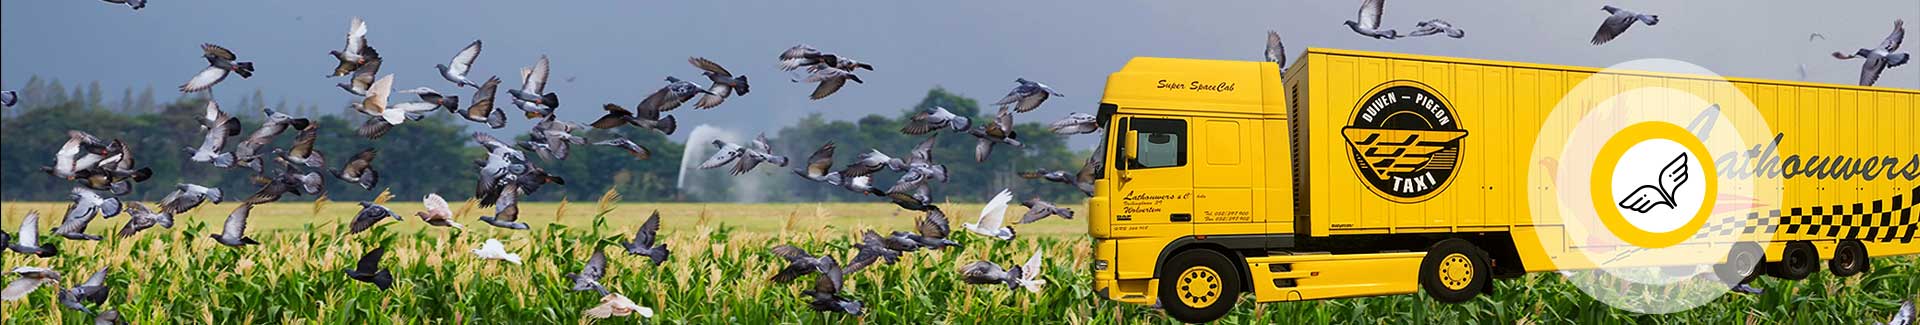 Transport de pigeons